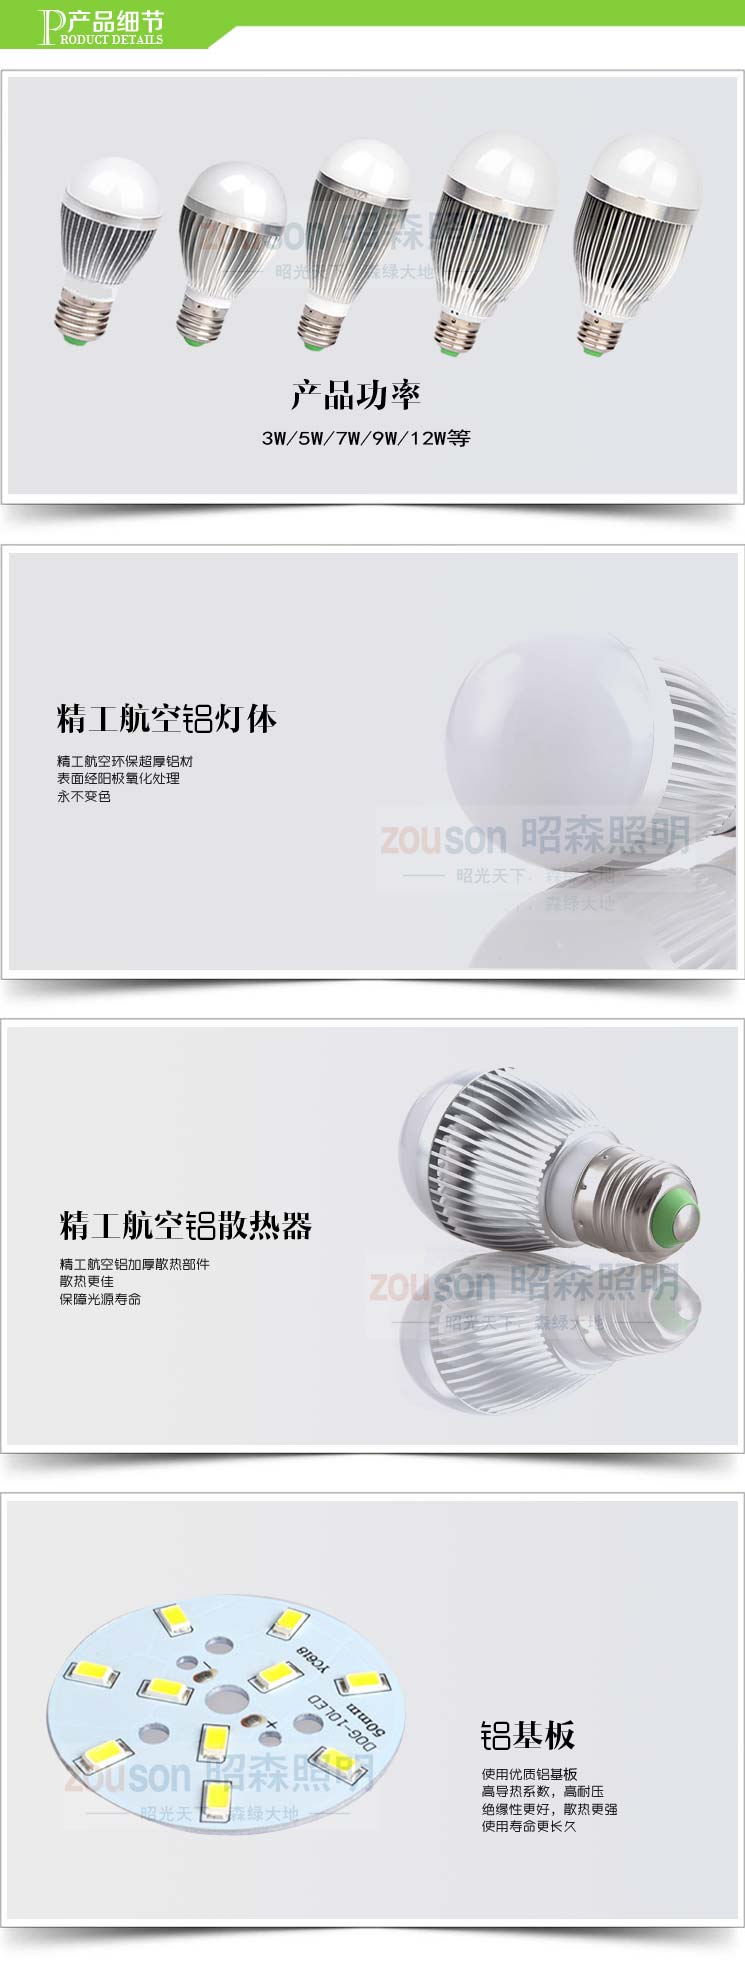 LED球泡灯12W产品细节